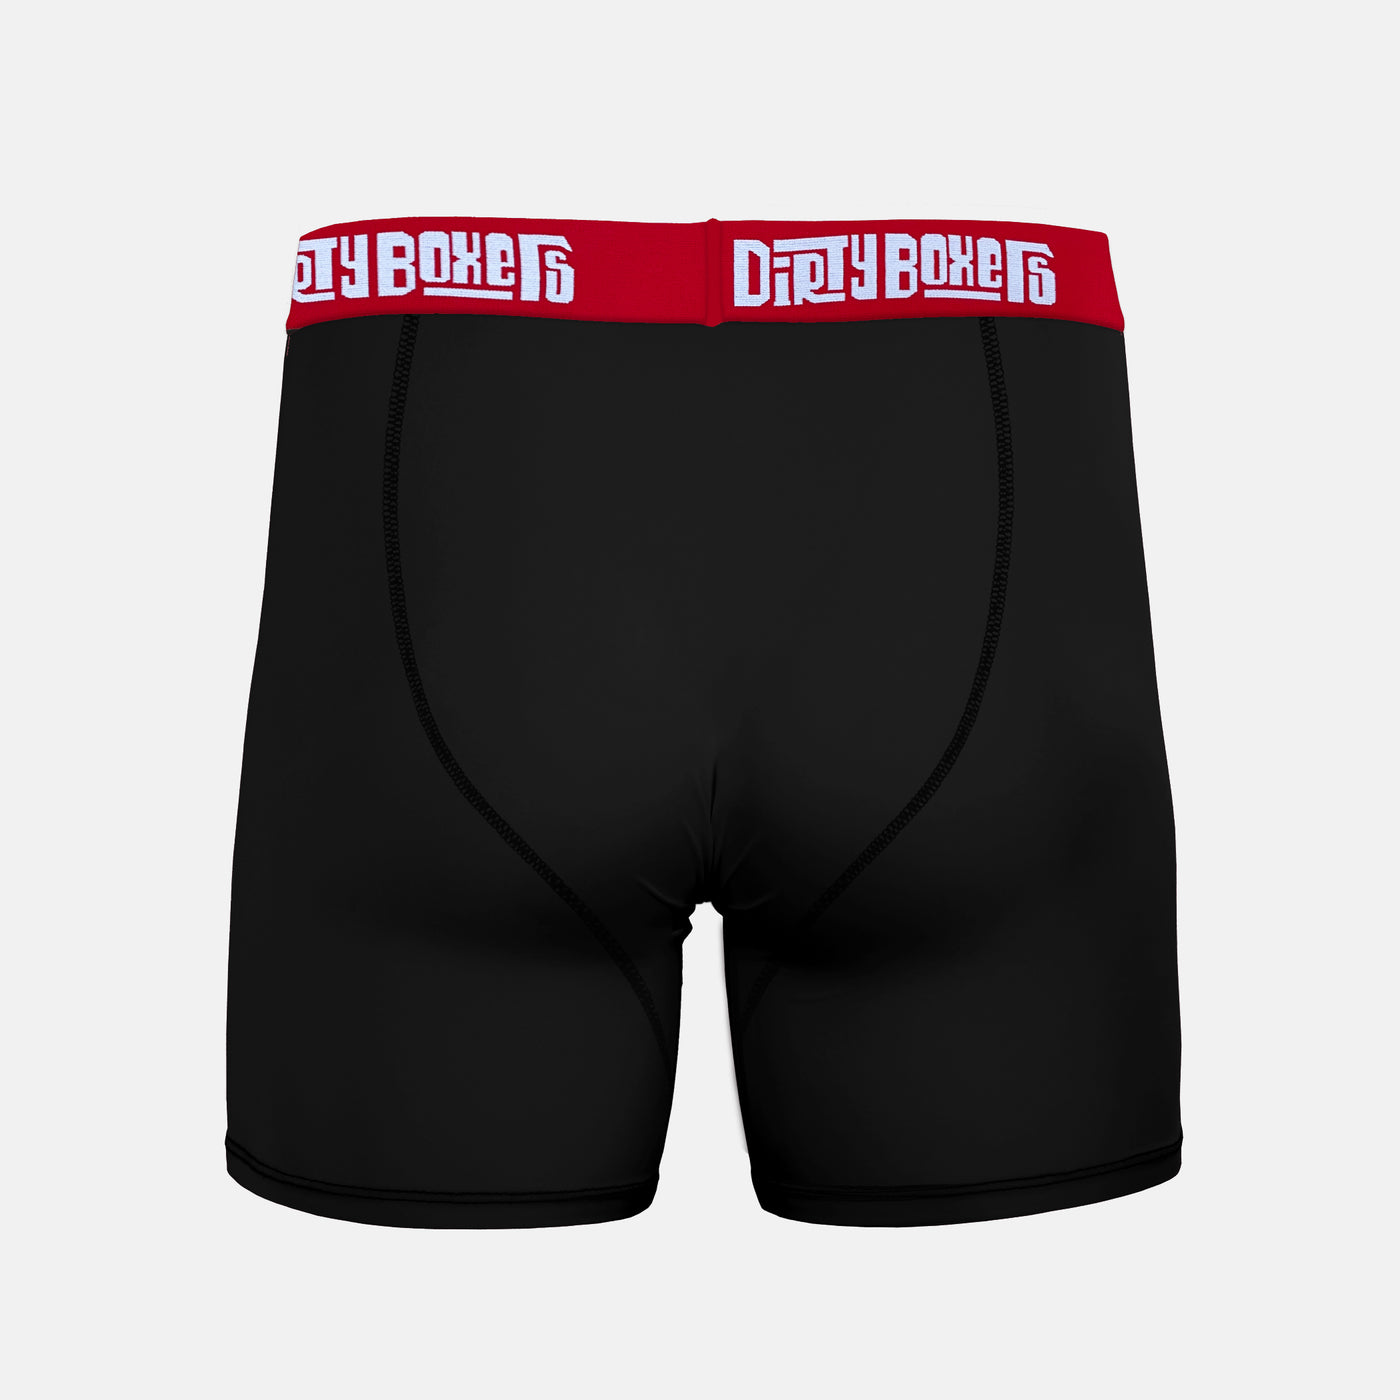 Long Lasting Dirty Boxers Men's Underwear